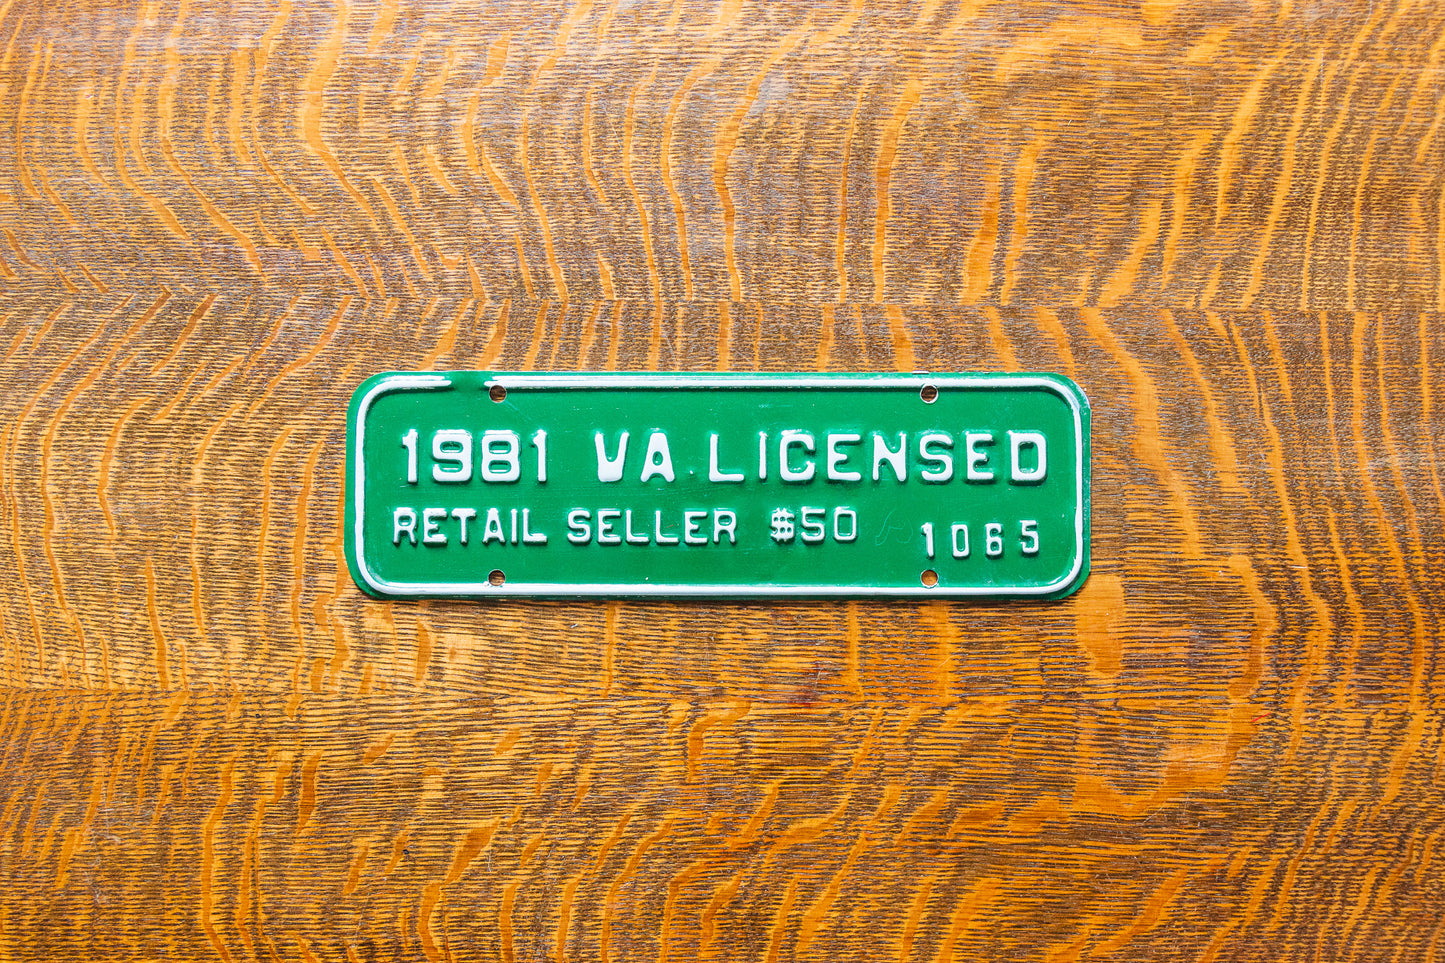 1981 Virginia Seller License Plate Vintage Green Wall Decor 1065